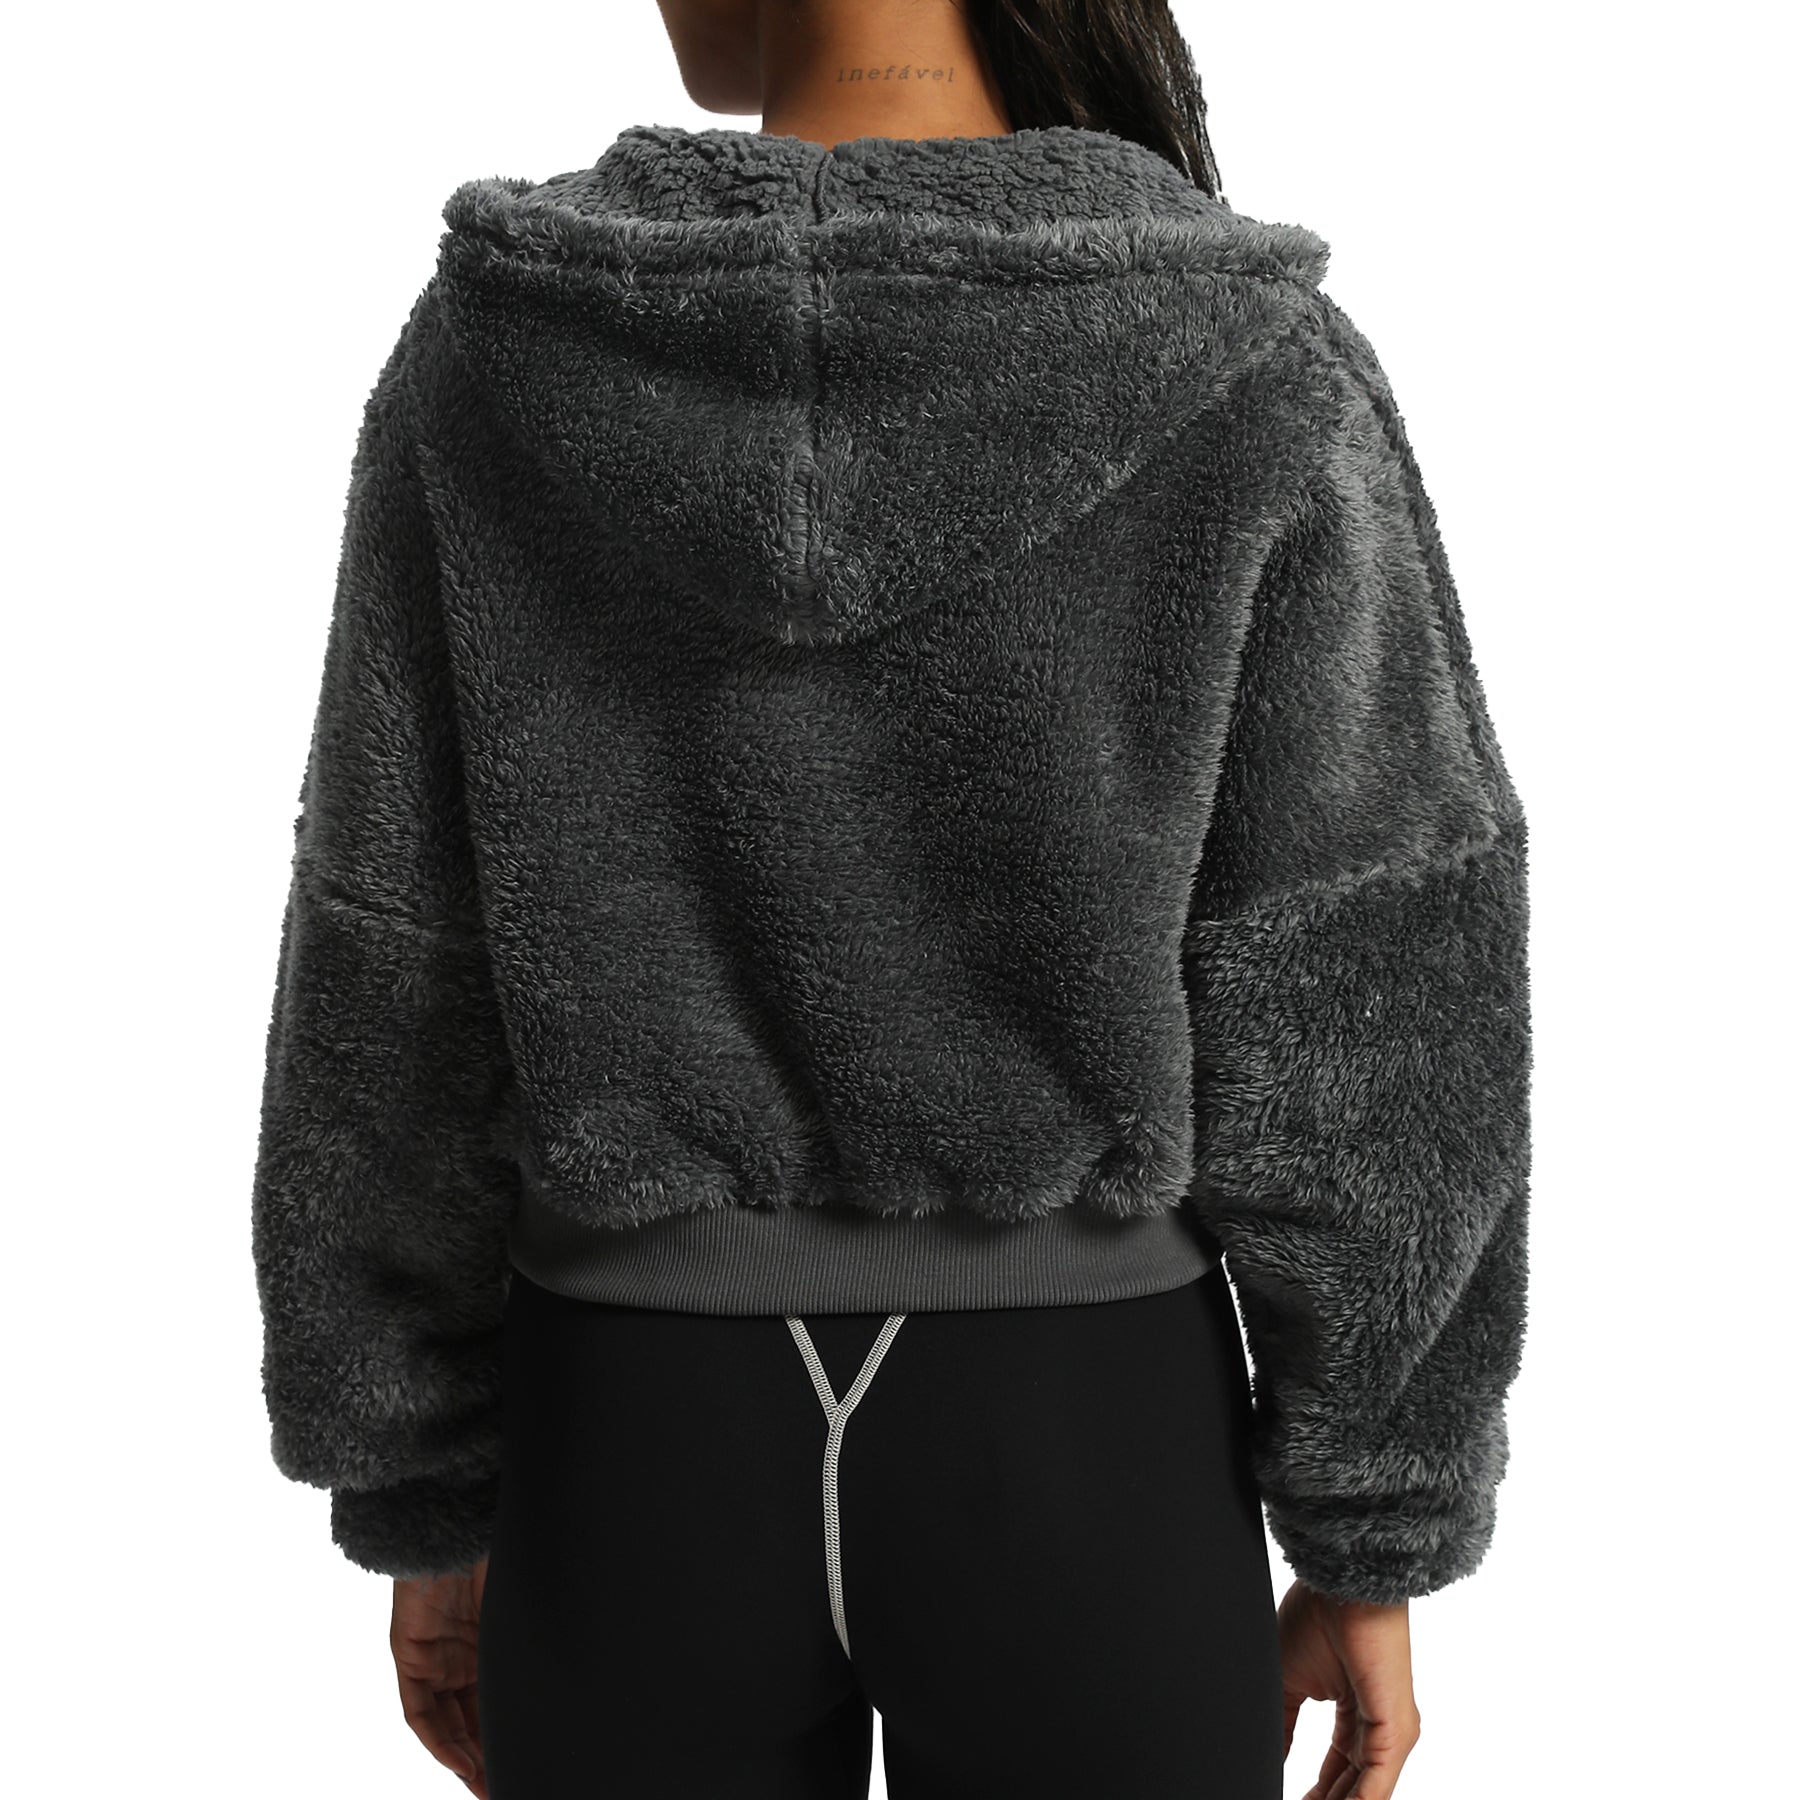 Aoxjox "Teddy" Oversized Hooded Zip Sweater